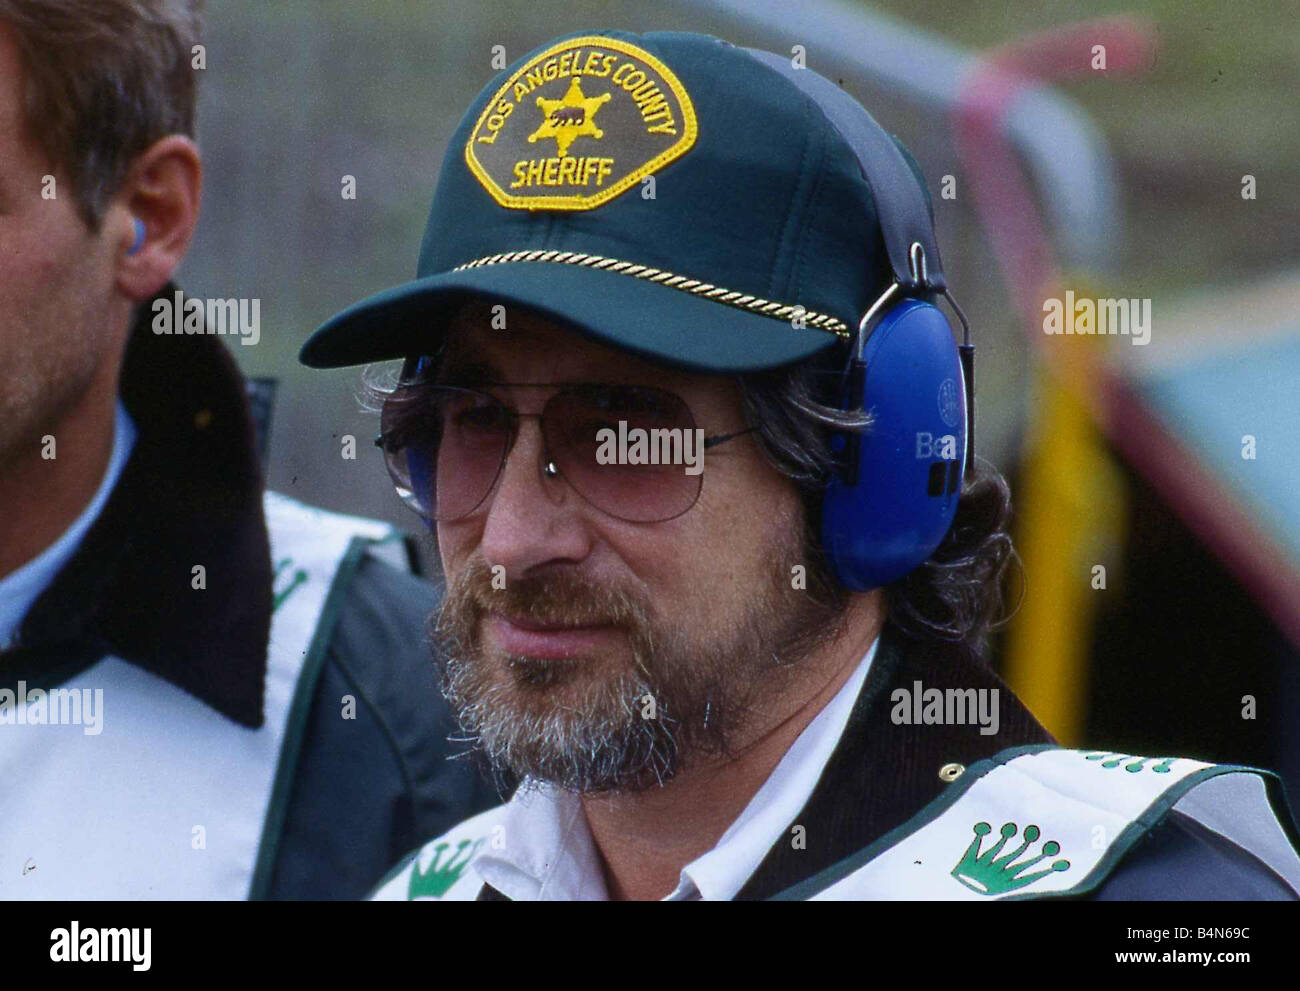 Steven Spielberg Cancer Research shoot Gleneagles 1988 baseball cap ear  protectors glasses Stock Photo - Alamy